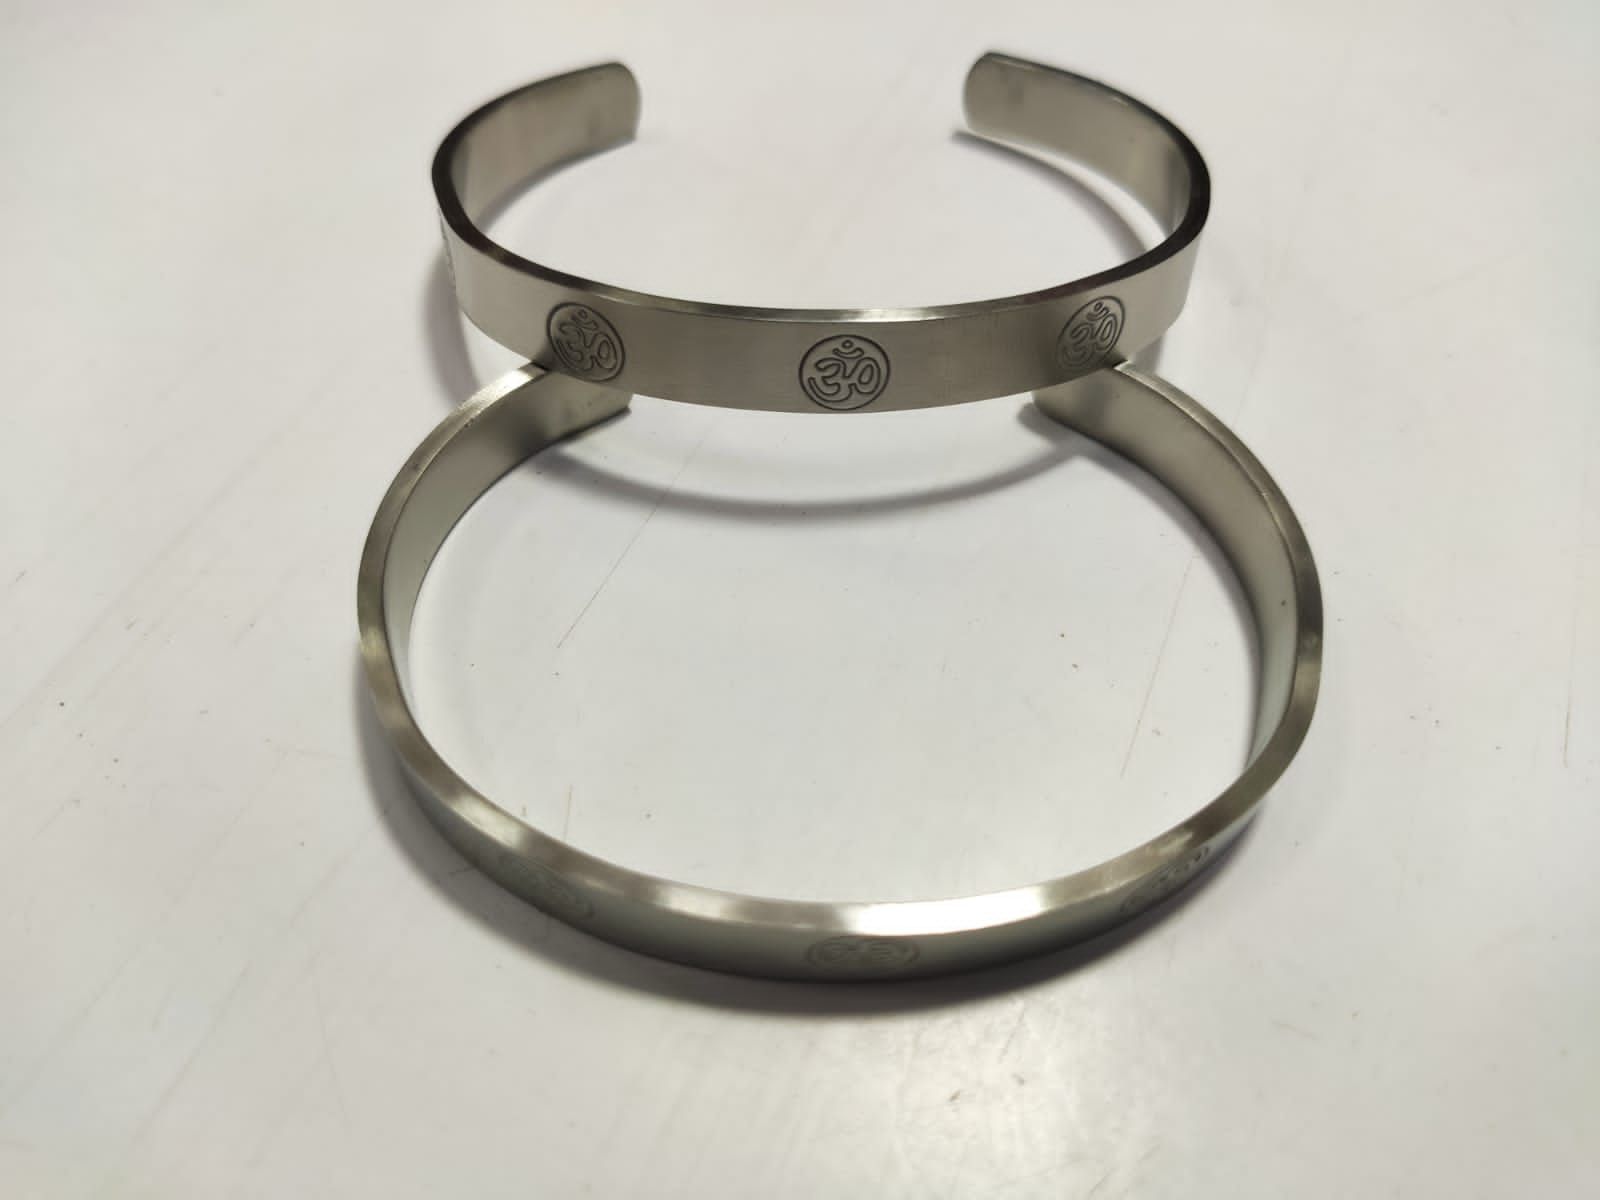 AUMKAARA Auspicious Silver Charm Om Bracelet With Adjustable Strap For Men  & Women : Amazon.in: Fashion